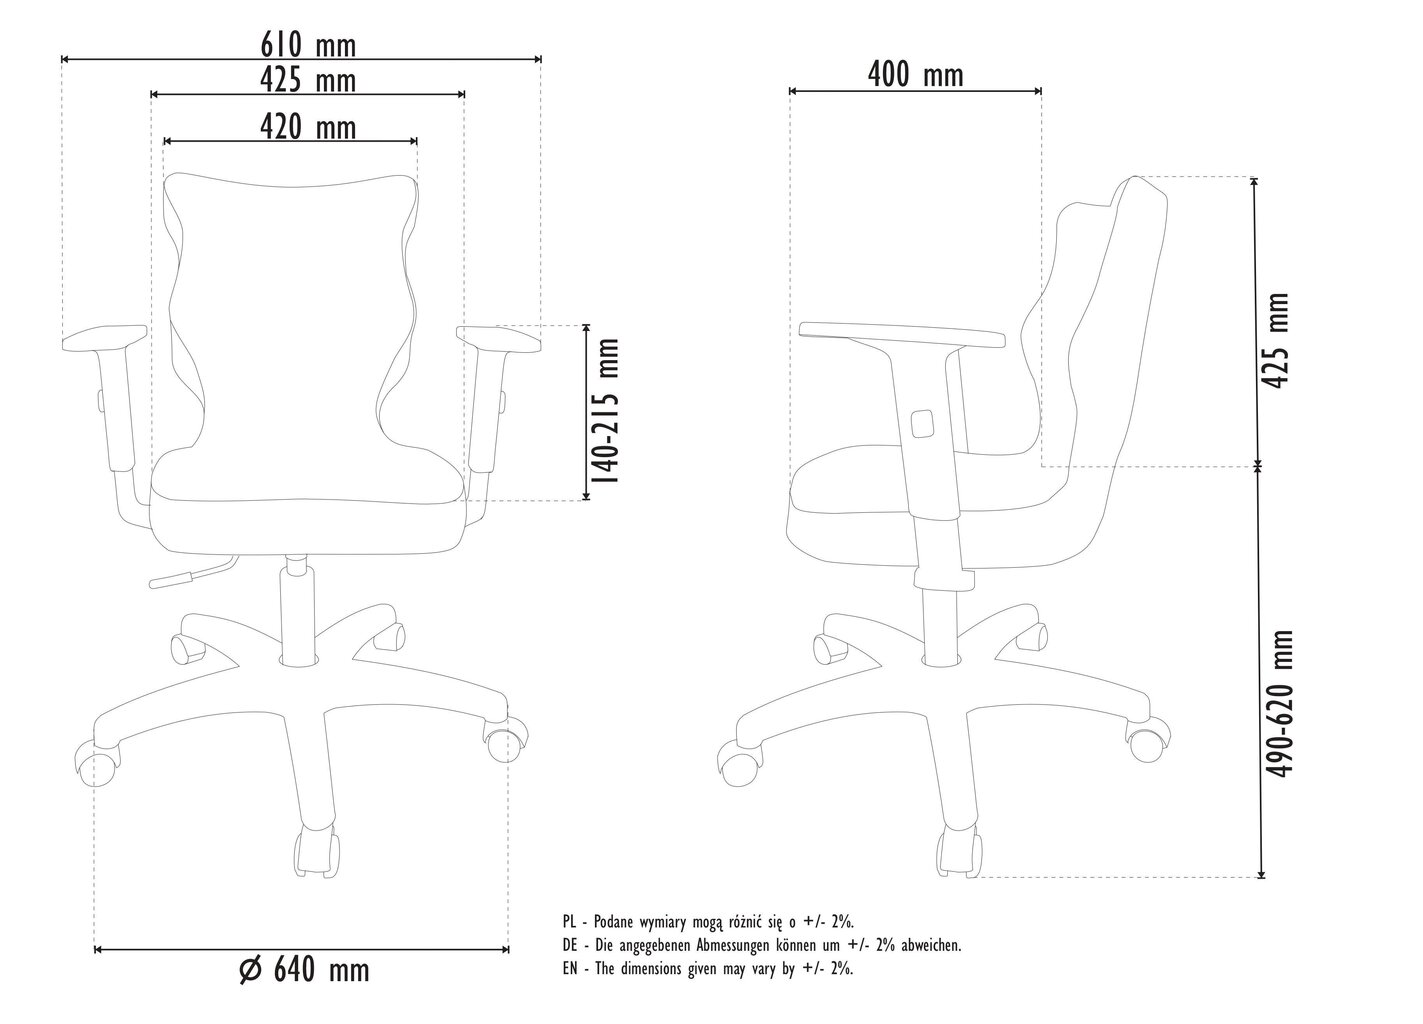 Kontoritool Entelo Good Chair Duo VS07 6, valge/lilla hind ja info | Kontoritoolid | kaup24.ee